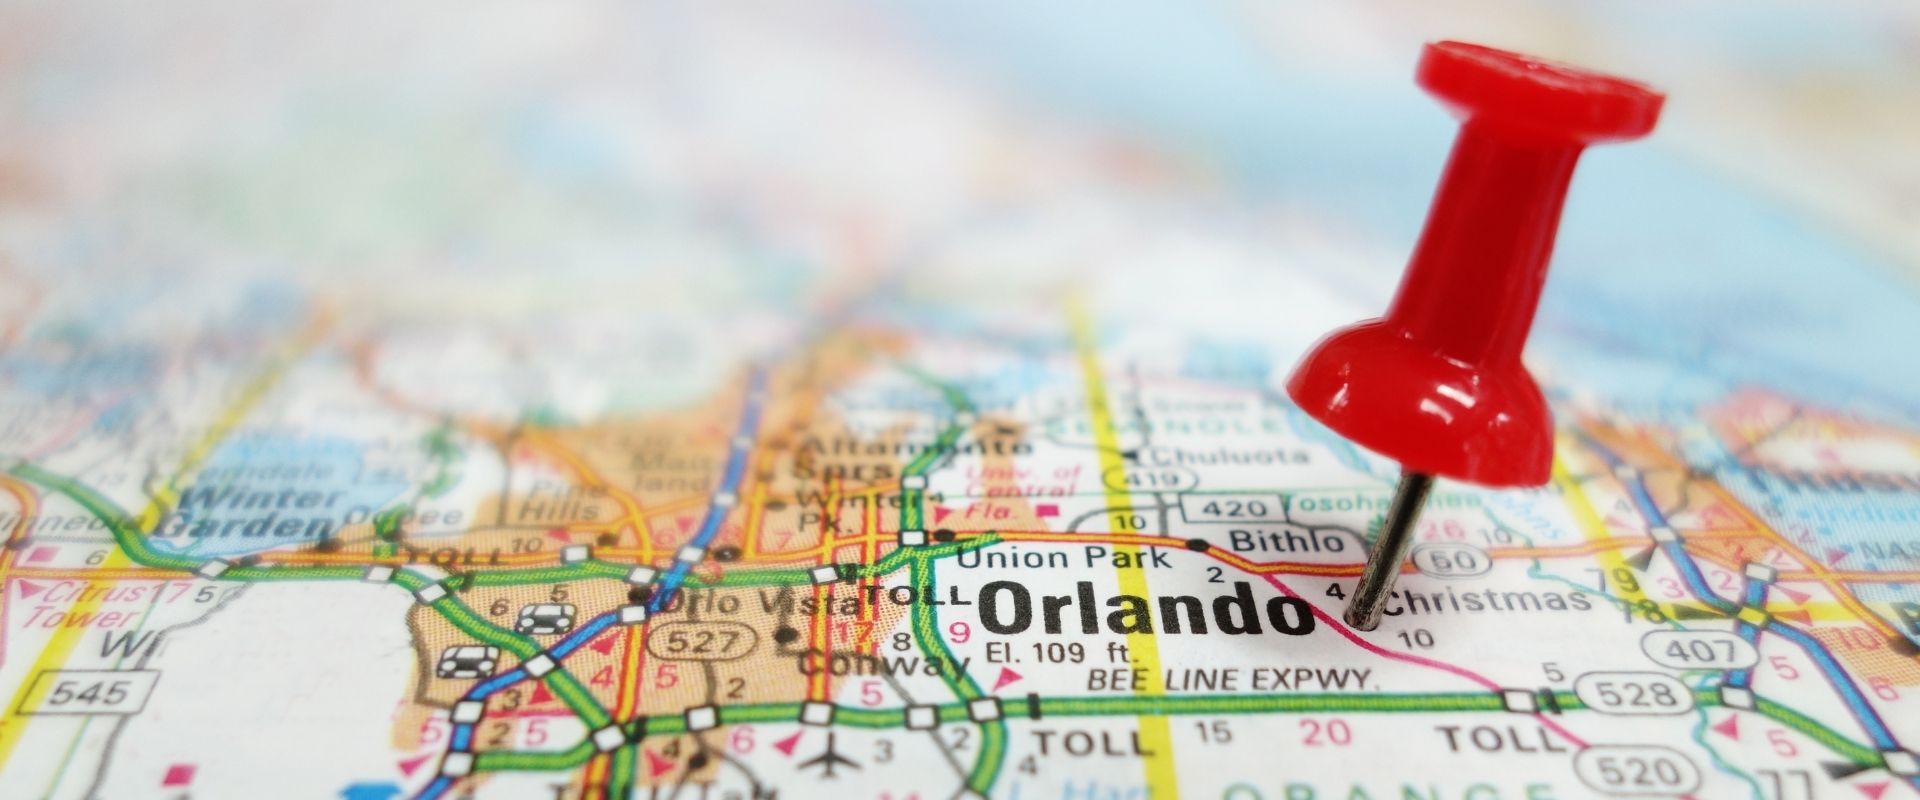 Pin On Map Of Orlando 